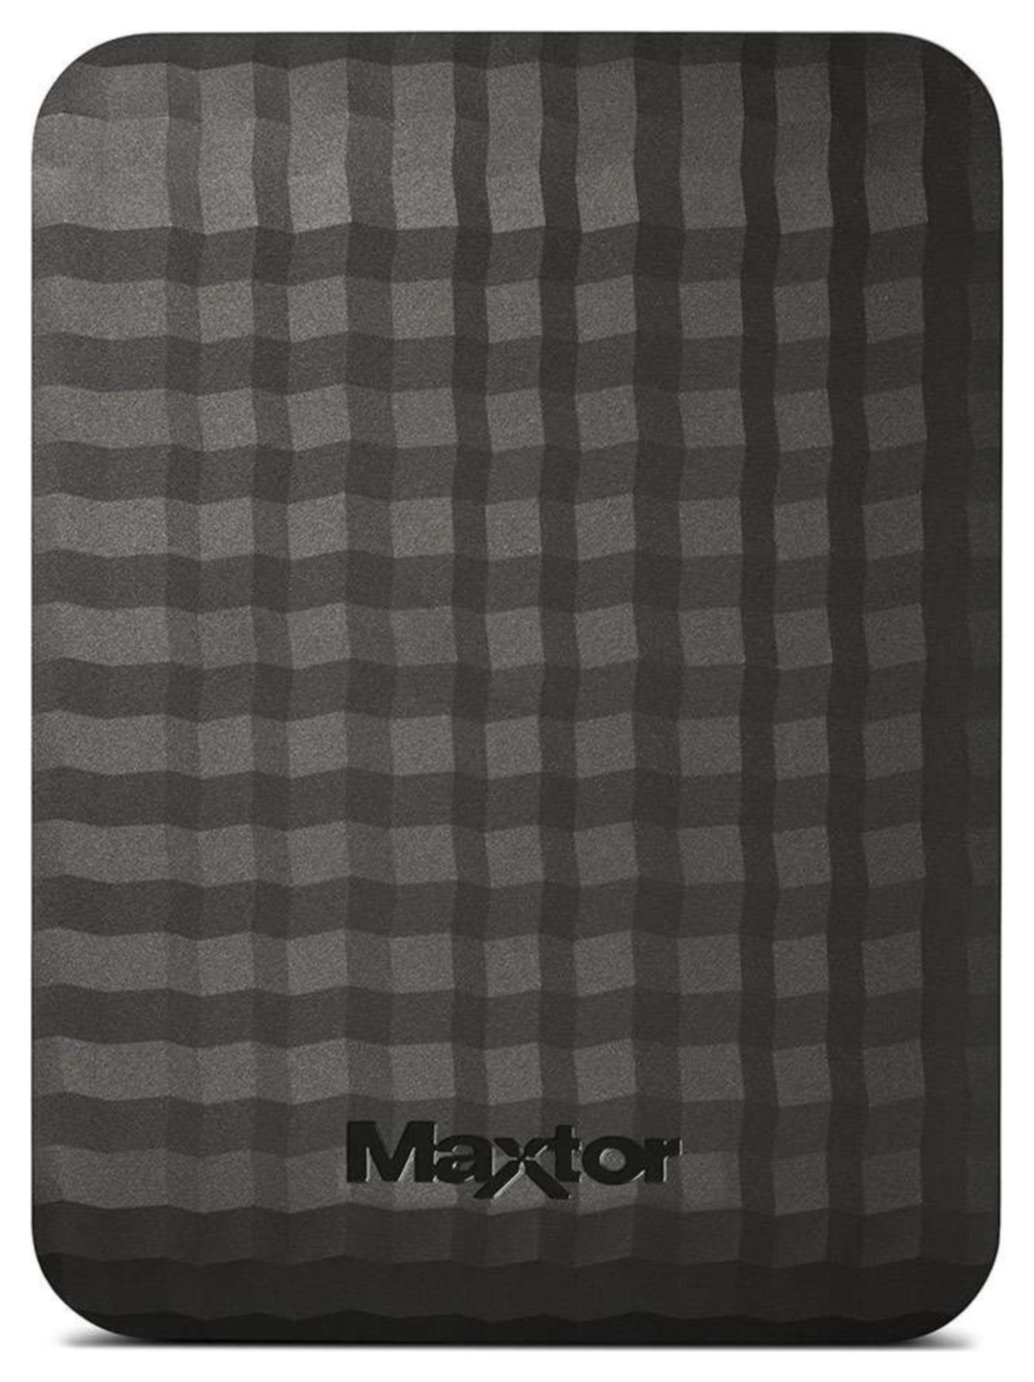 Maxtor M3 2TB Portable External Hard Drive review